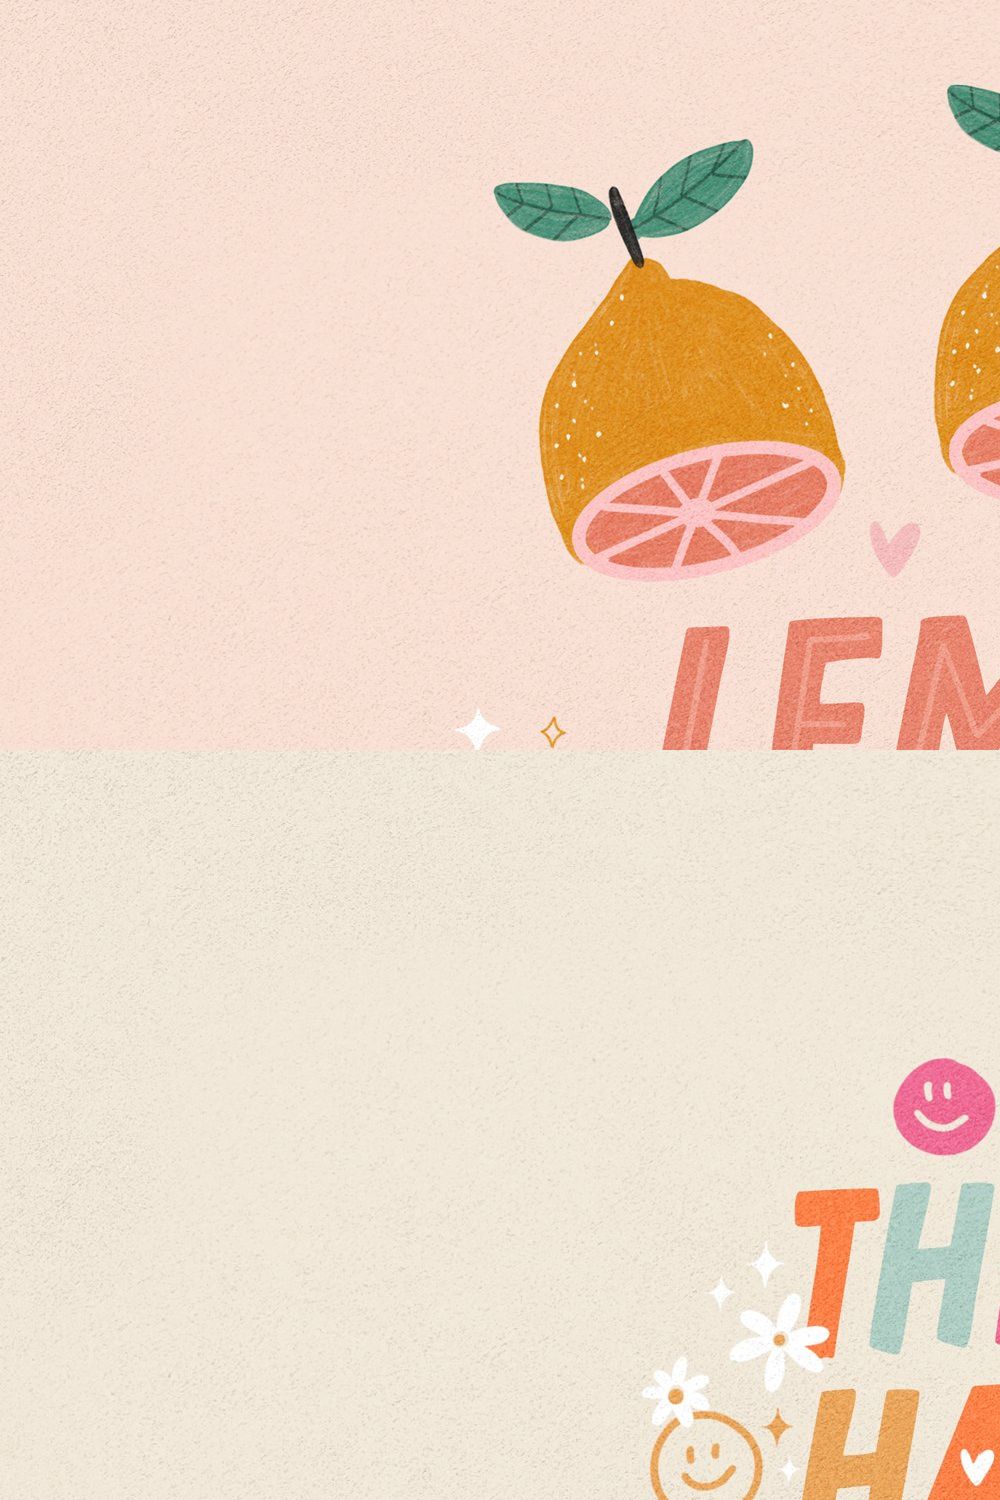 Lemon Milkshake Typeface and Dings pinterest preview image.